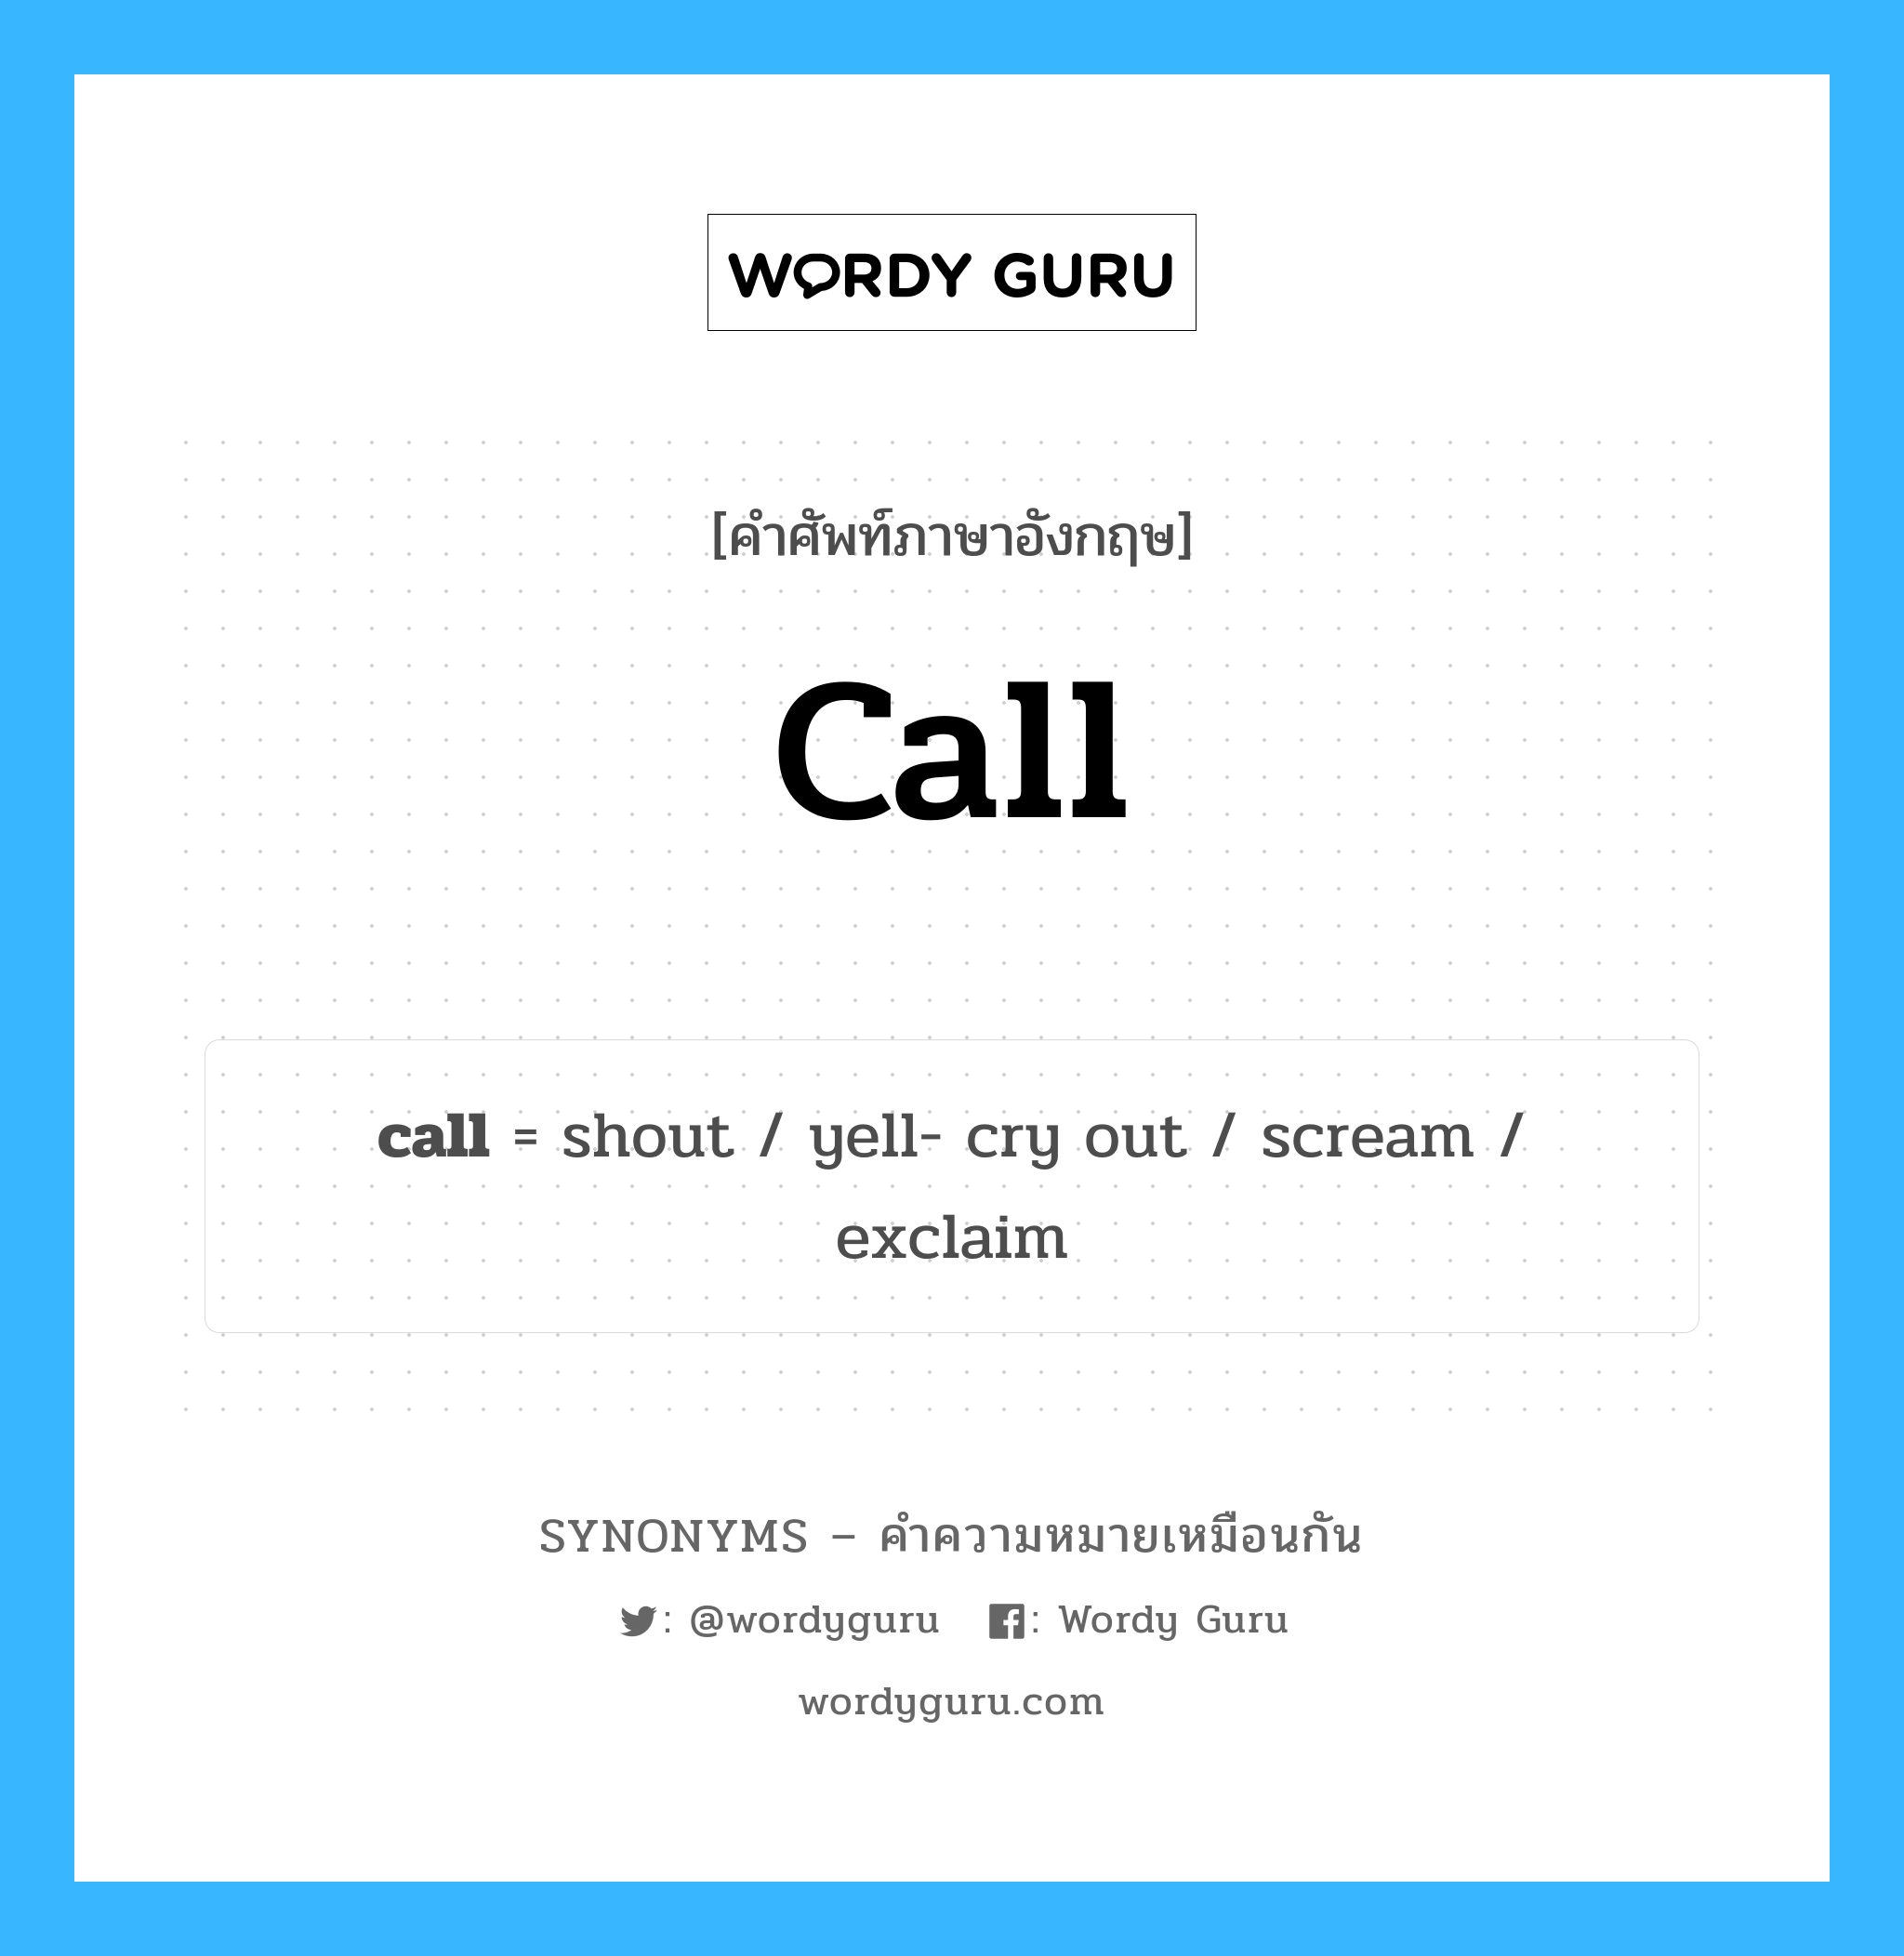 shout เป็นหนึ่งใน call และมีคำอื่น ๆ อีกดังนี้, คำศัพท์ภาษาอังกฤษ shout ความหมายคล้ายกันกับ call แปลว่า ตะโกน หมวด call